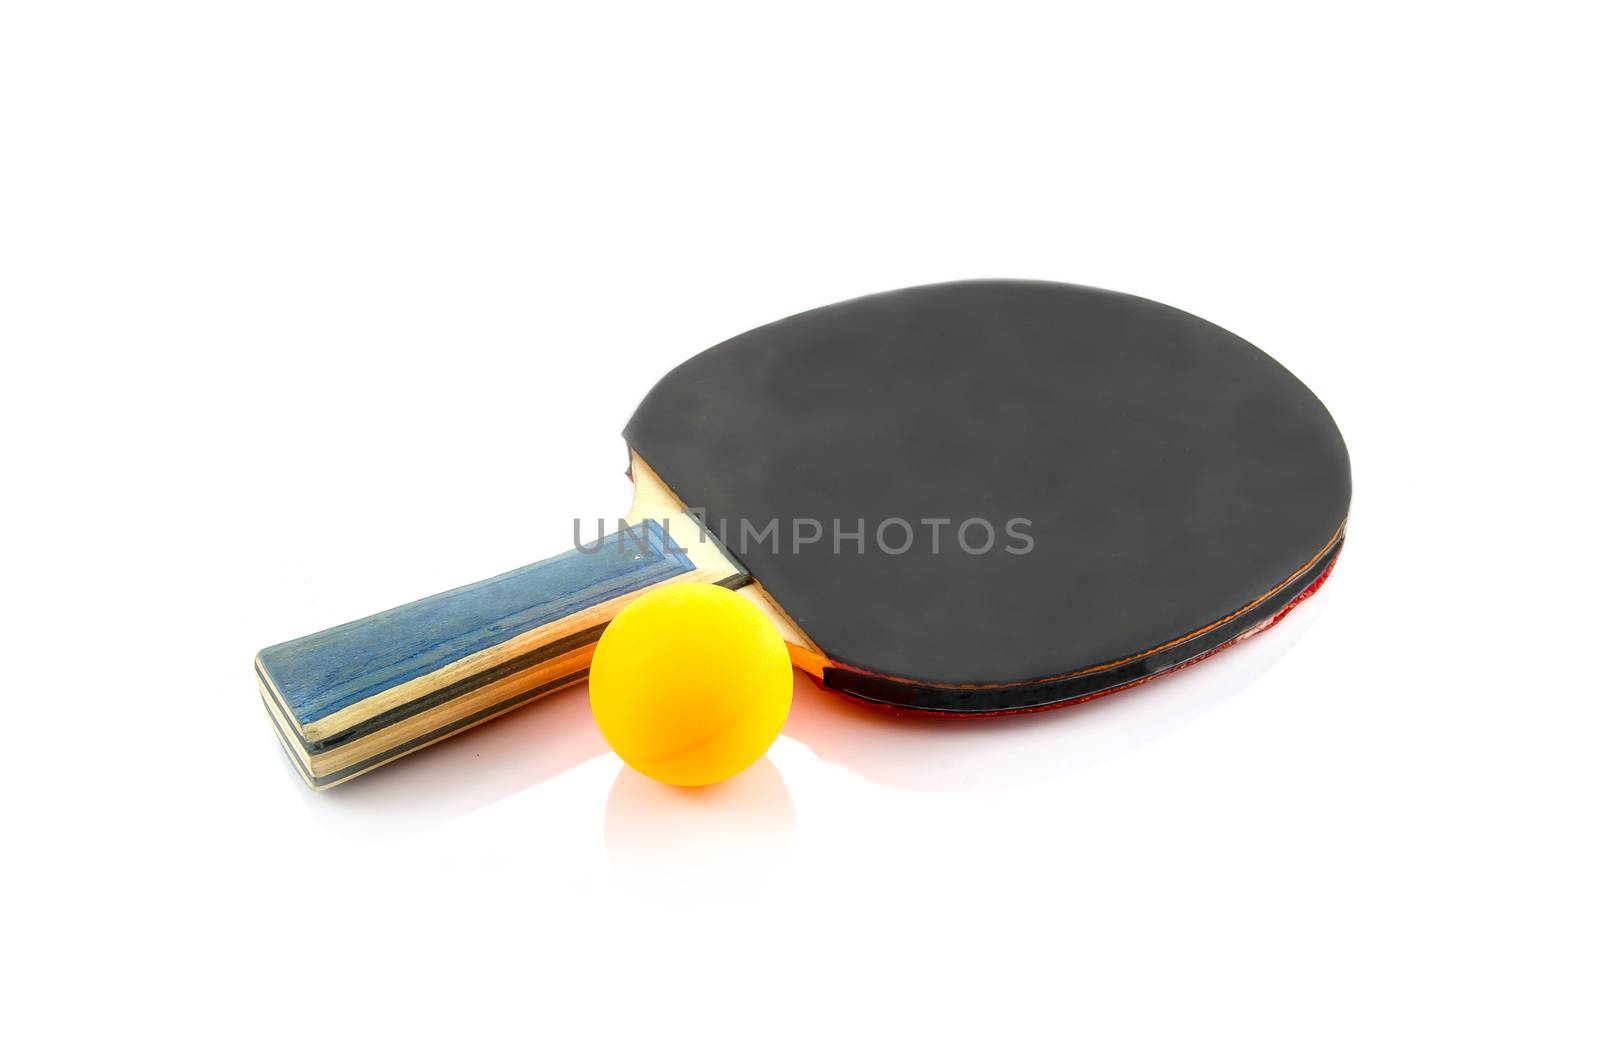 Table tennis by seksan44